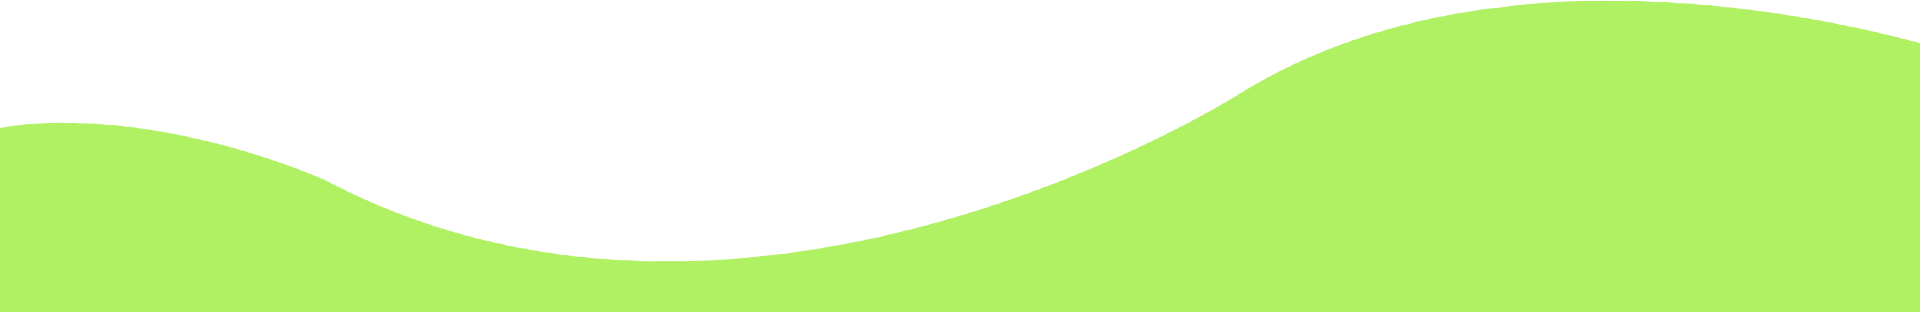 middle-green-separetor